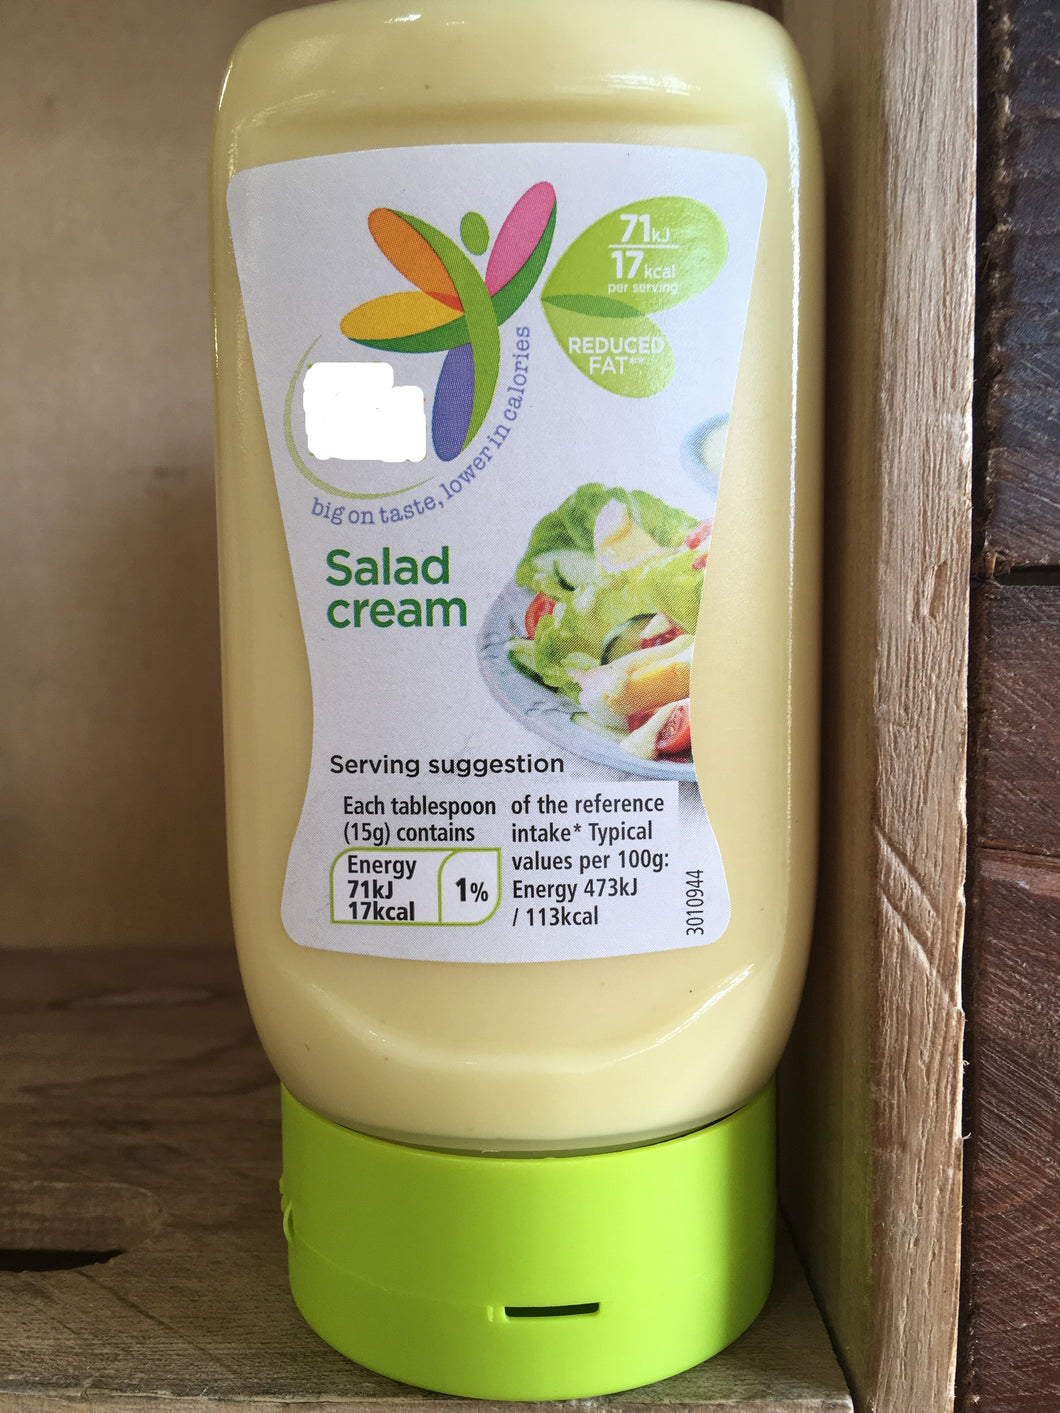 Low Price Reduced Fat Salad Cream 305g